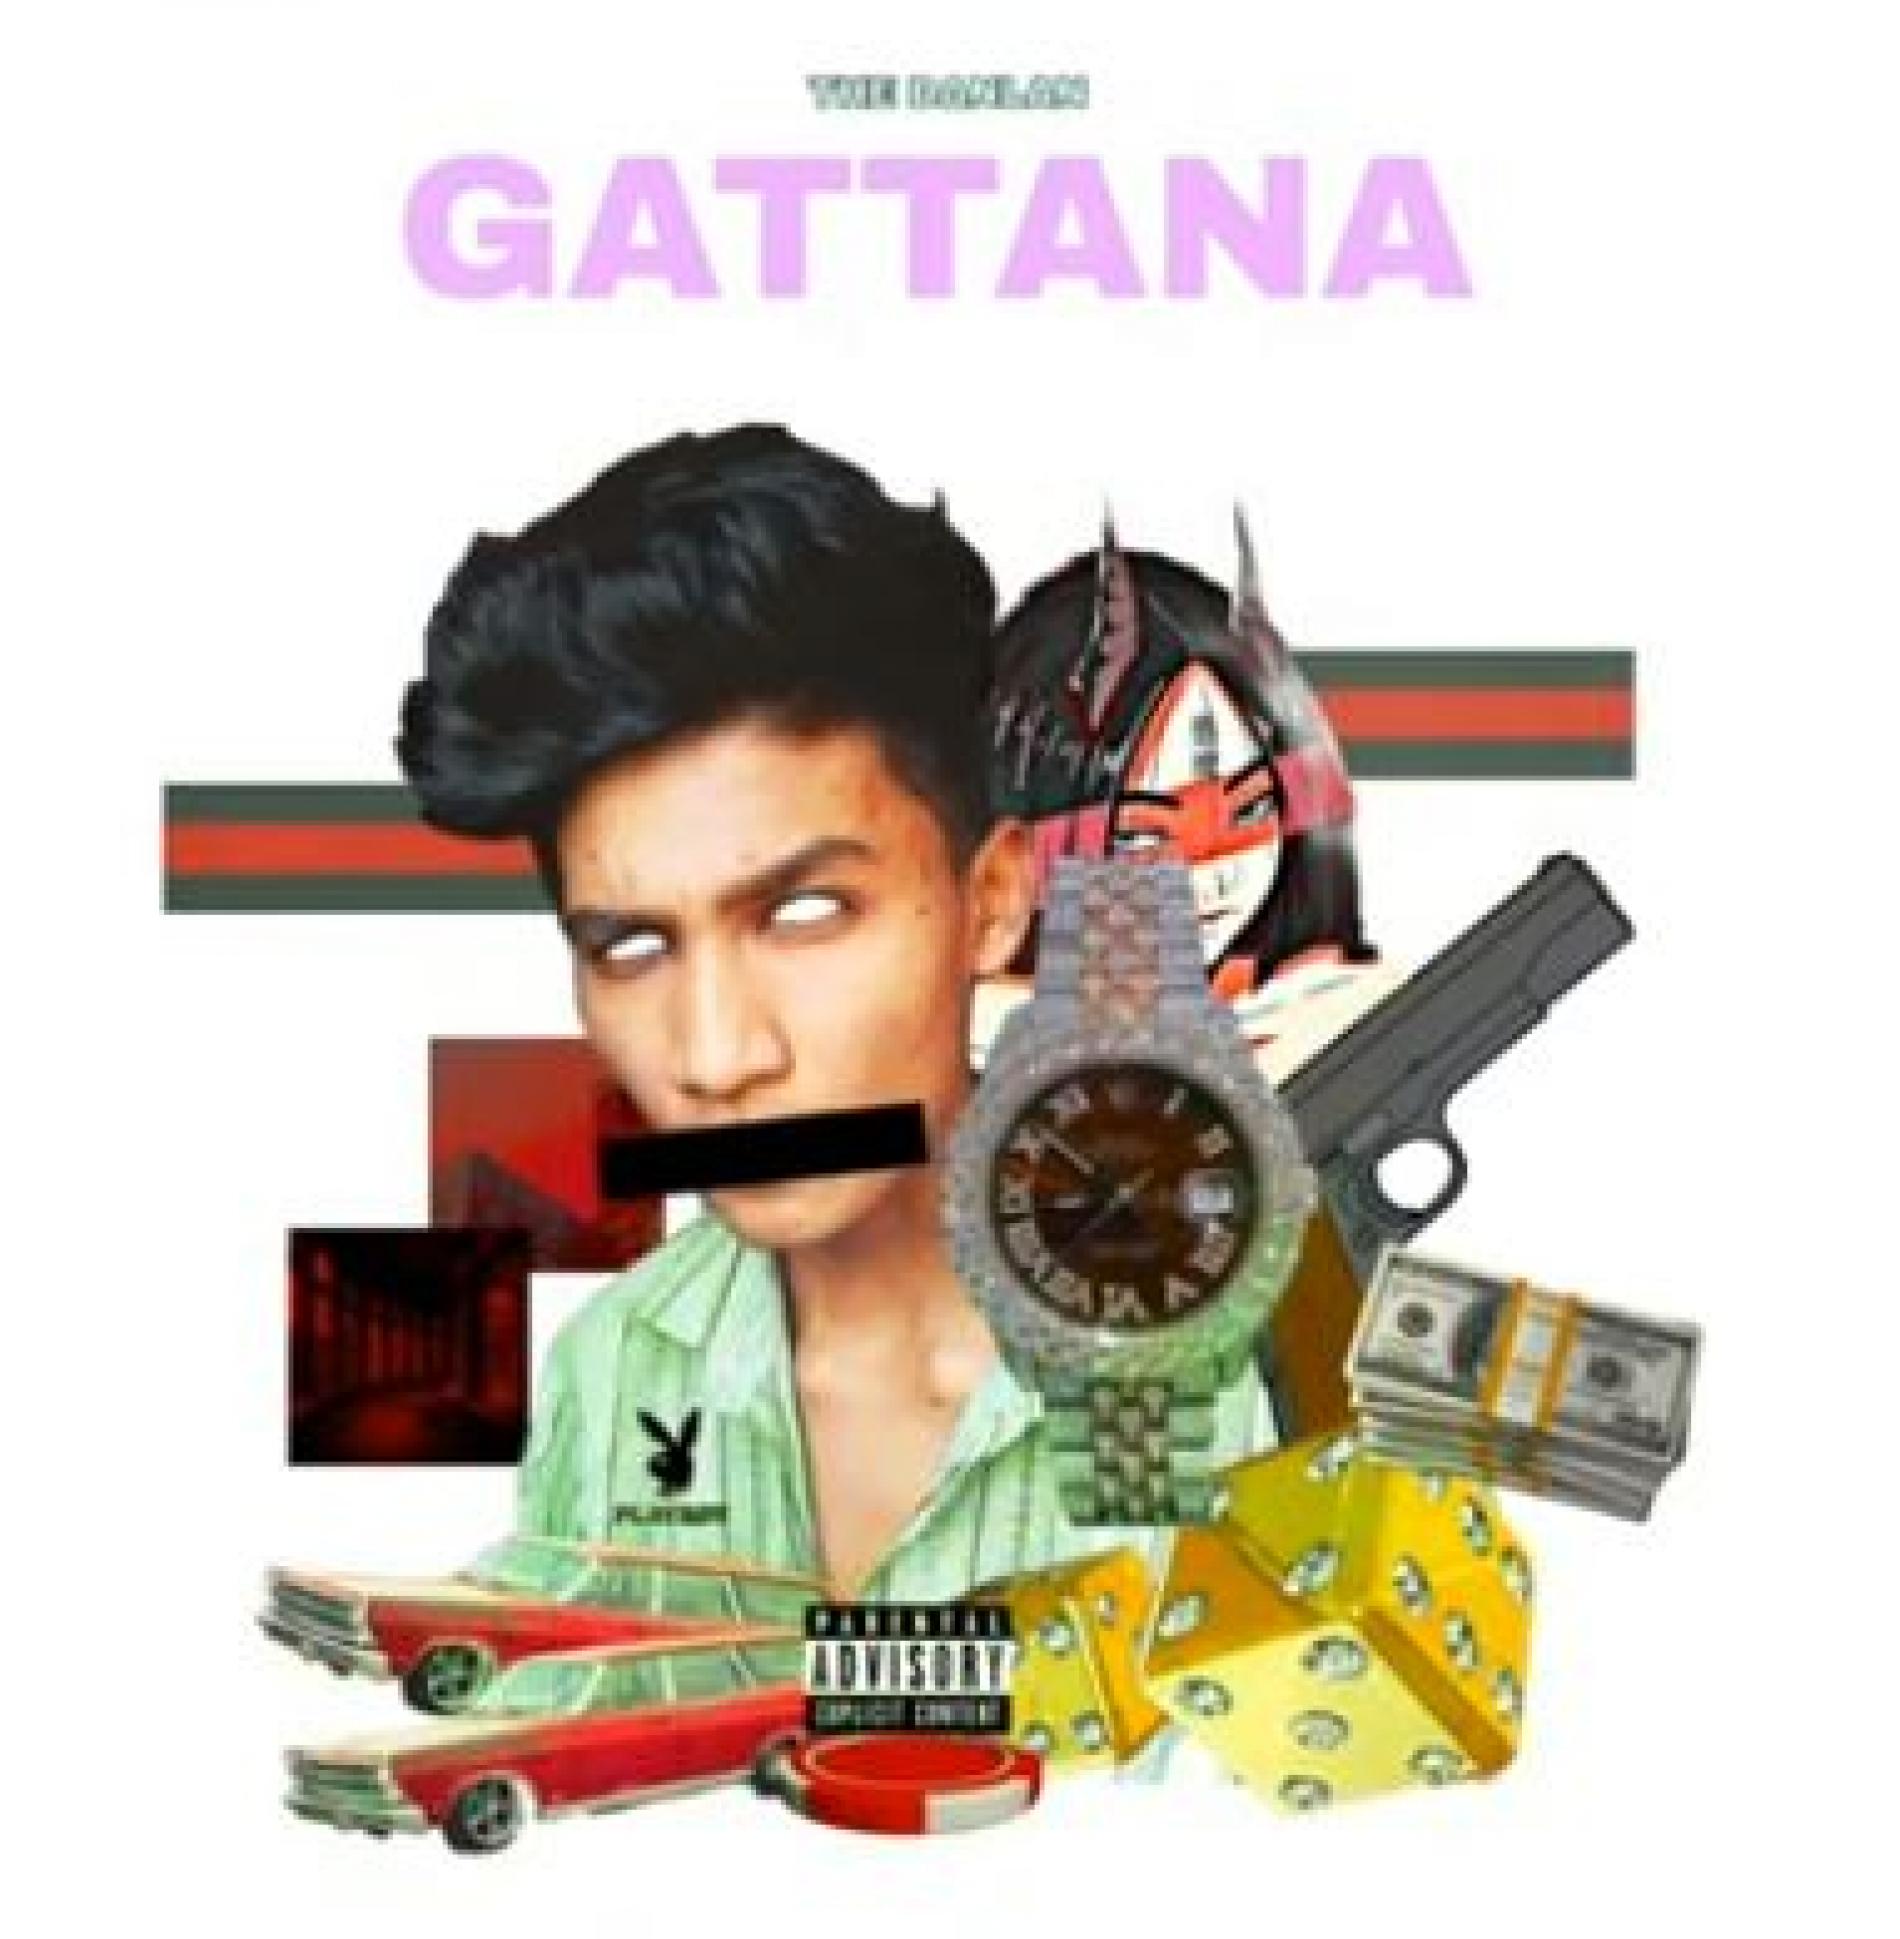 New Music : The D∆nlan – Gattana (Official Audio)